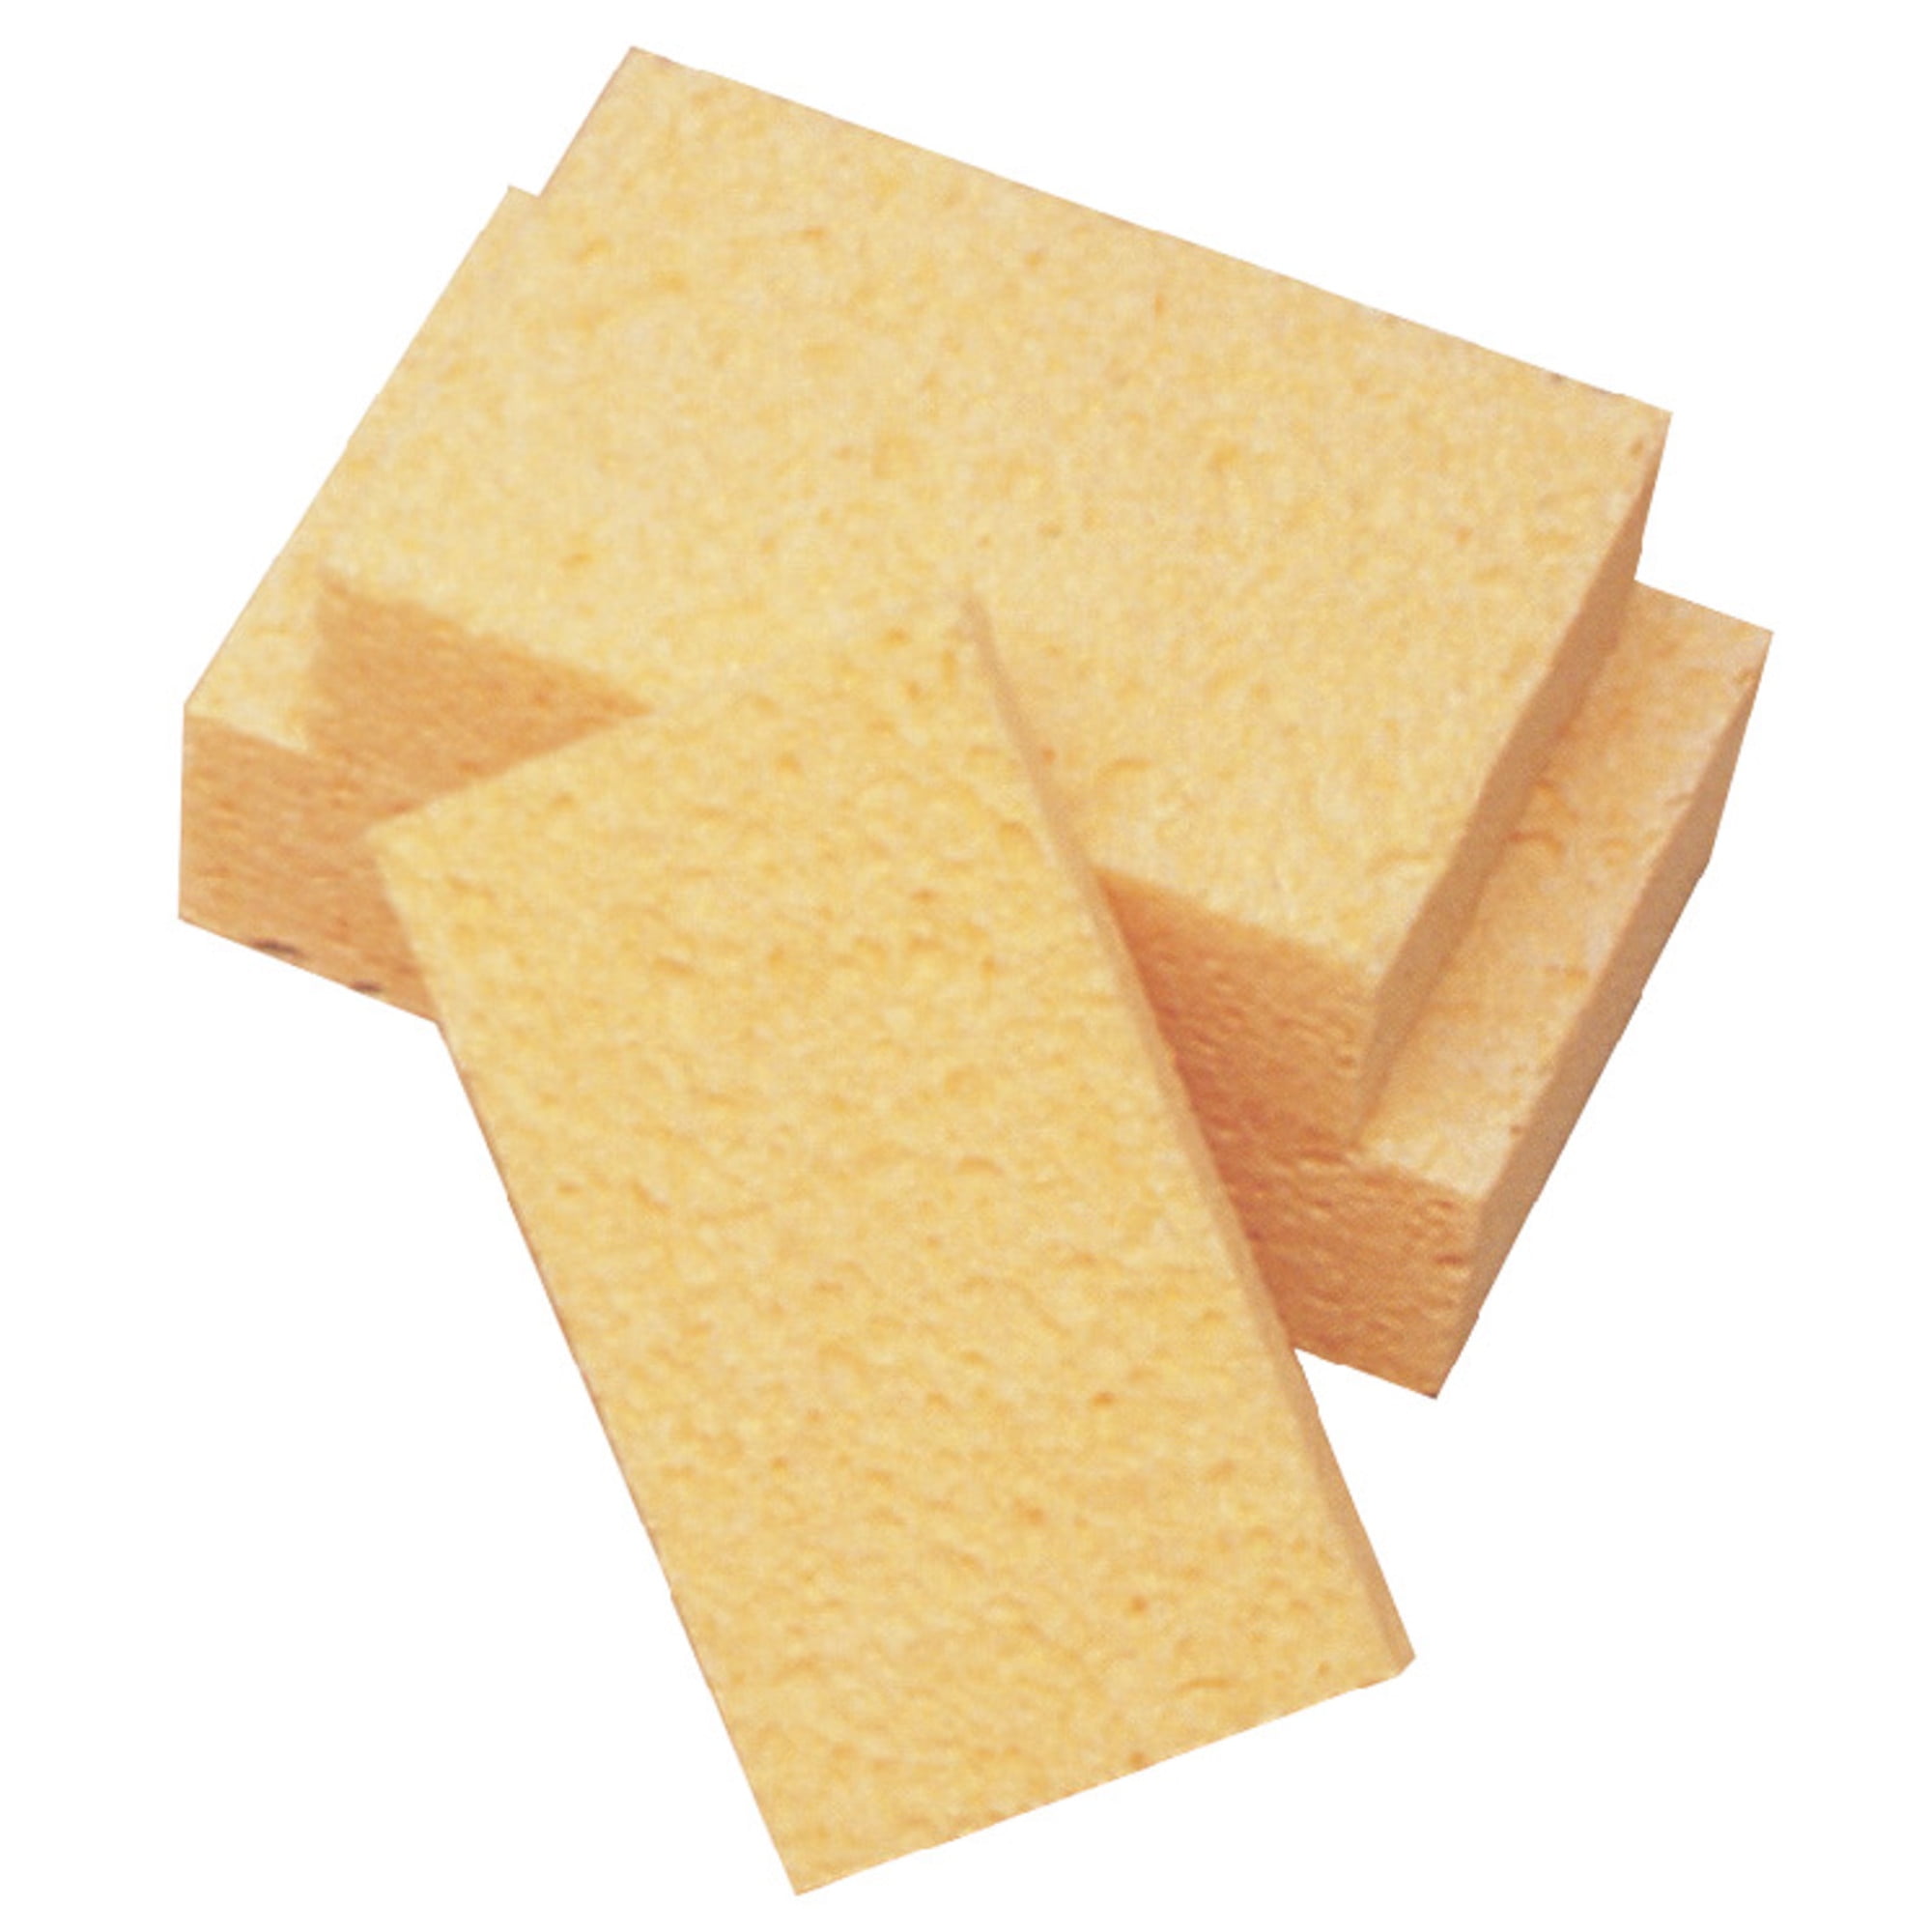 Lavex 6 x 3 1/2 x 3/4 Yellow Cellulose Sponge / Green Heavy